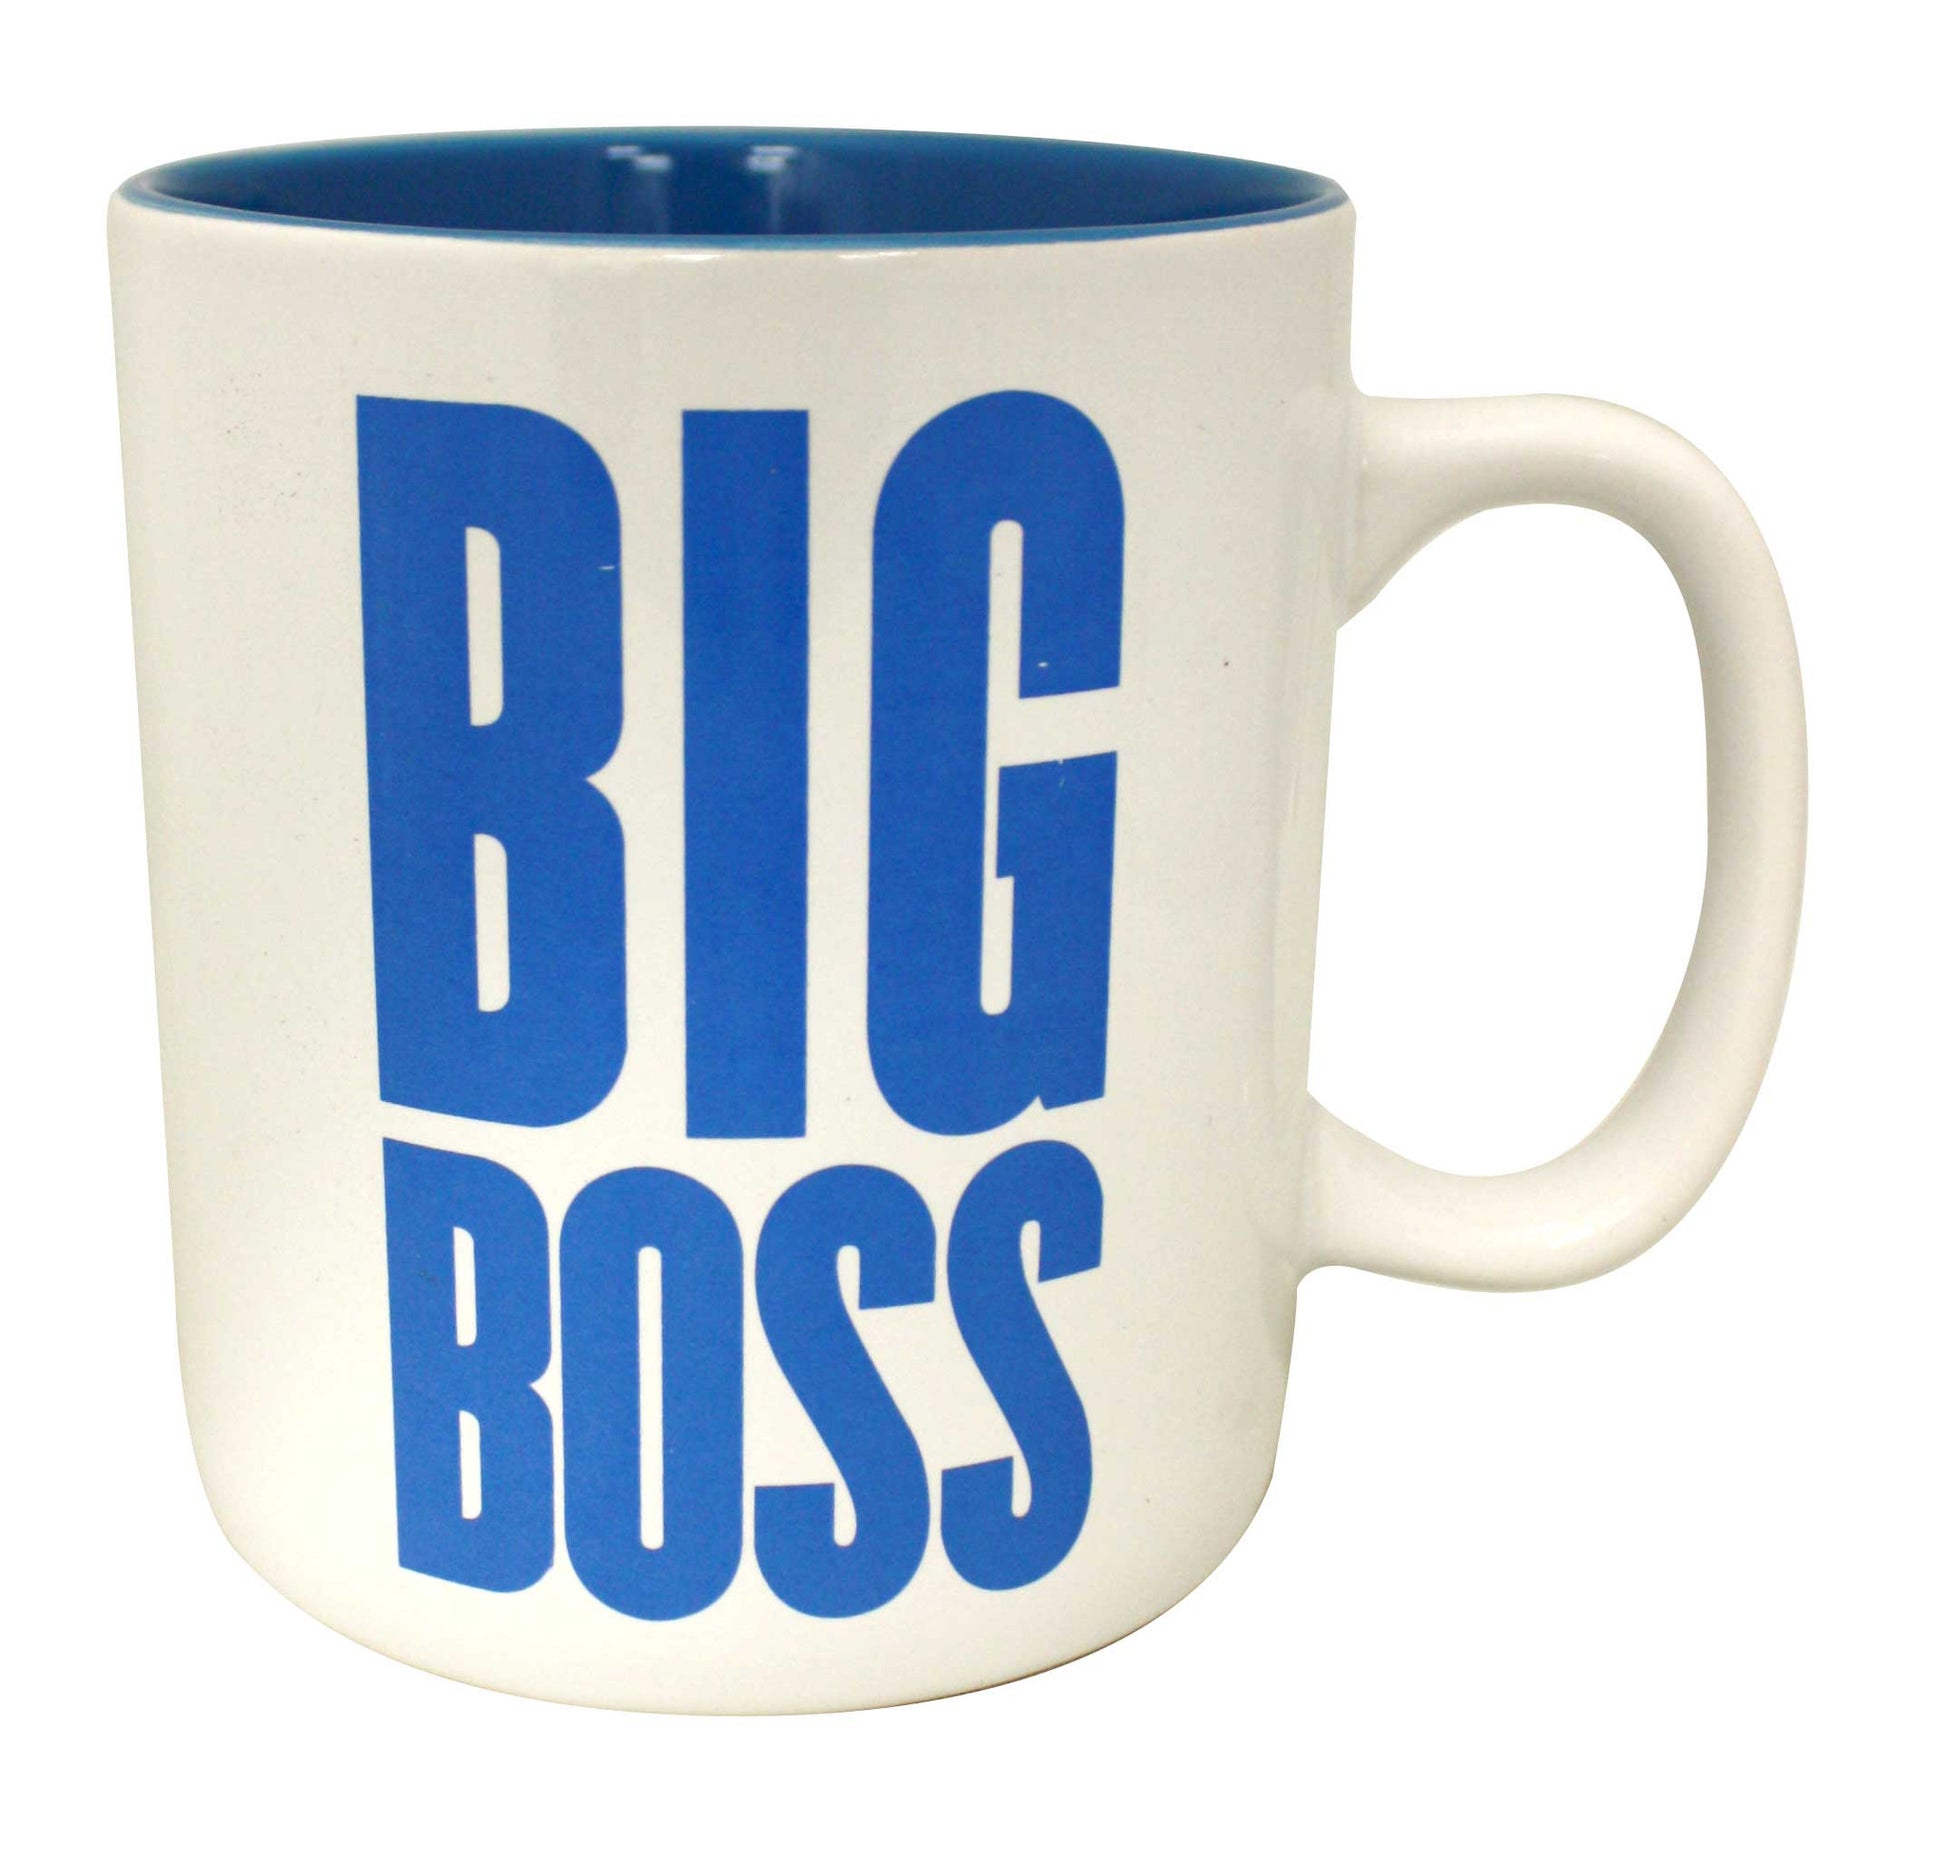 The Boss Oversized Mug